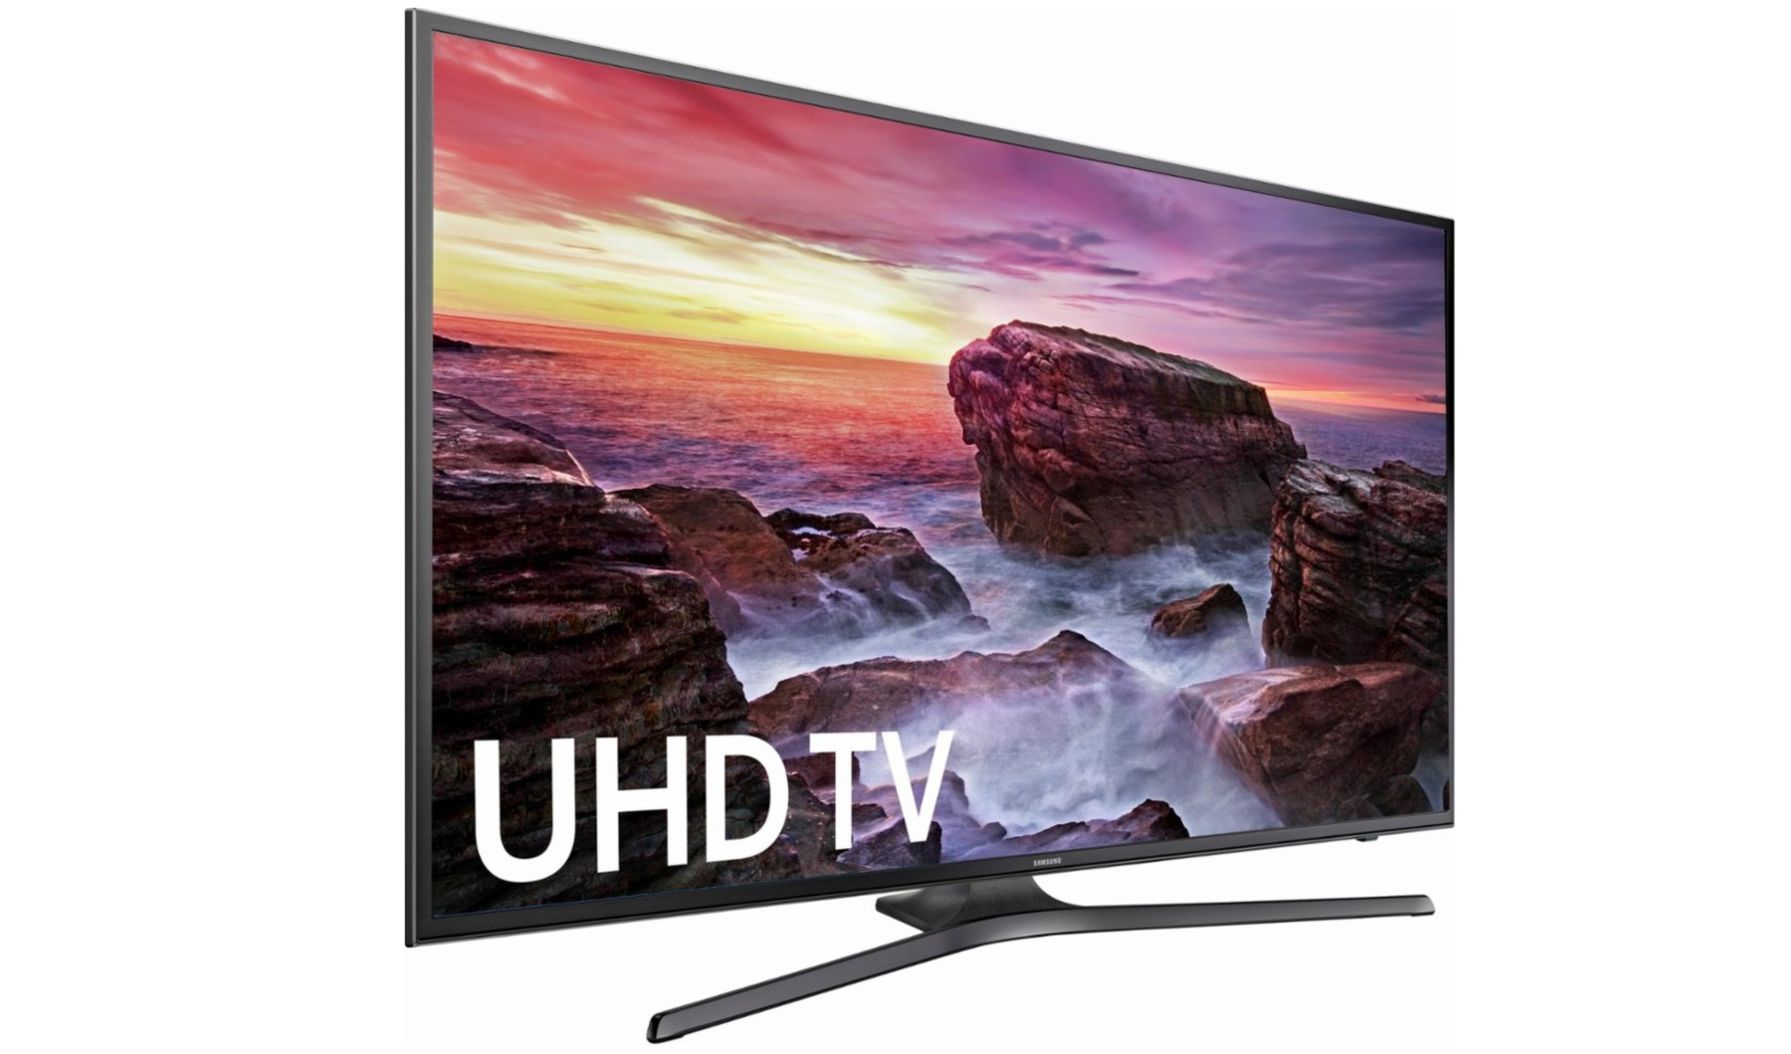 4K TVs on Sale - Shop Deals on Smart 4K TVs from Top Brands